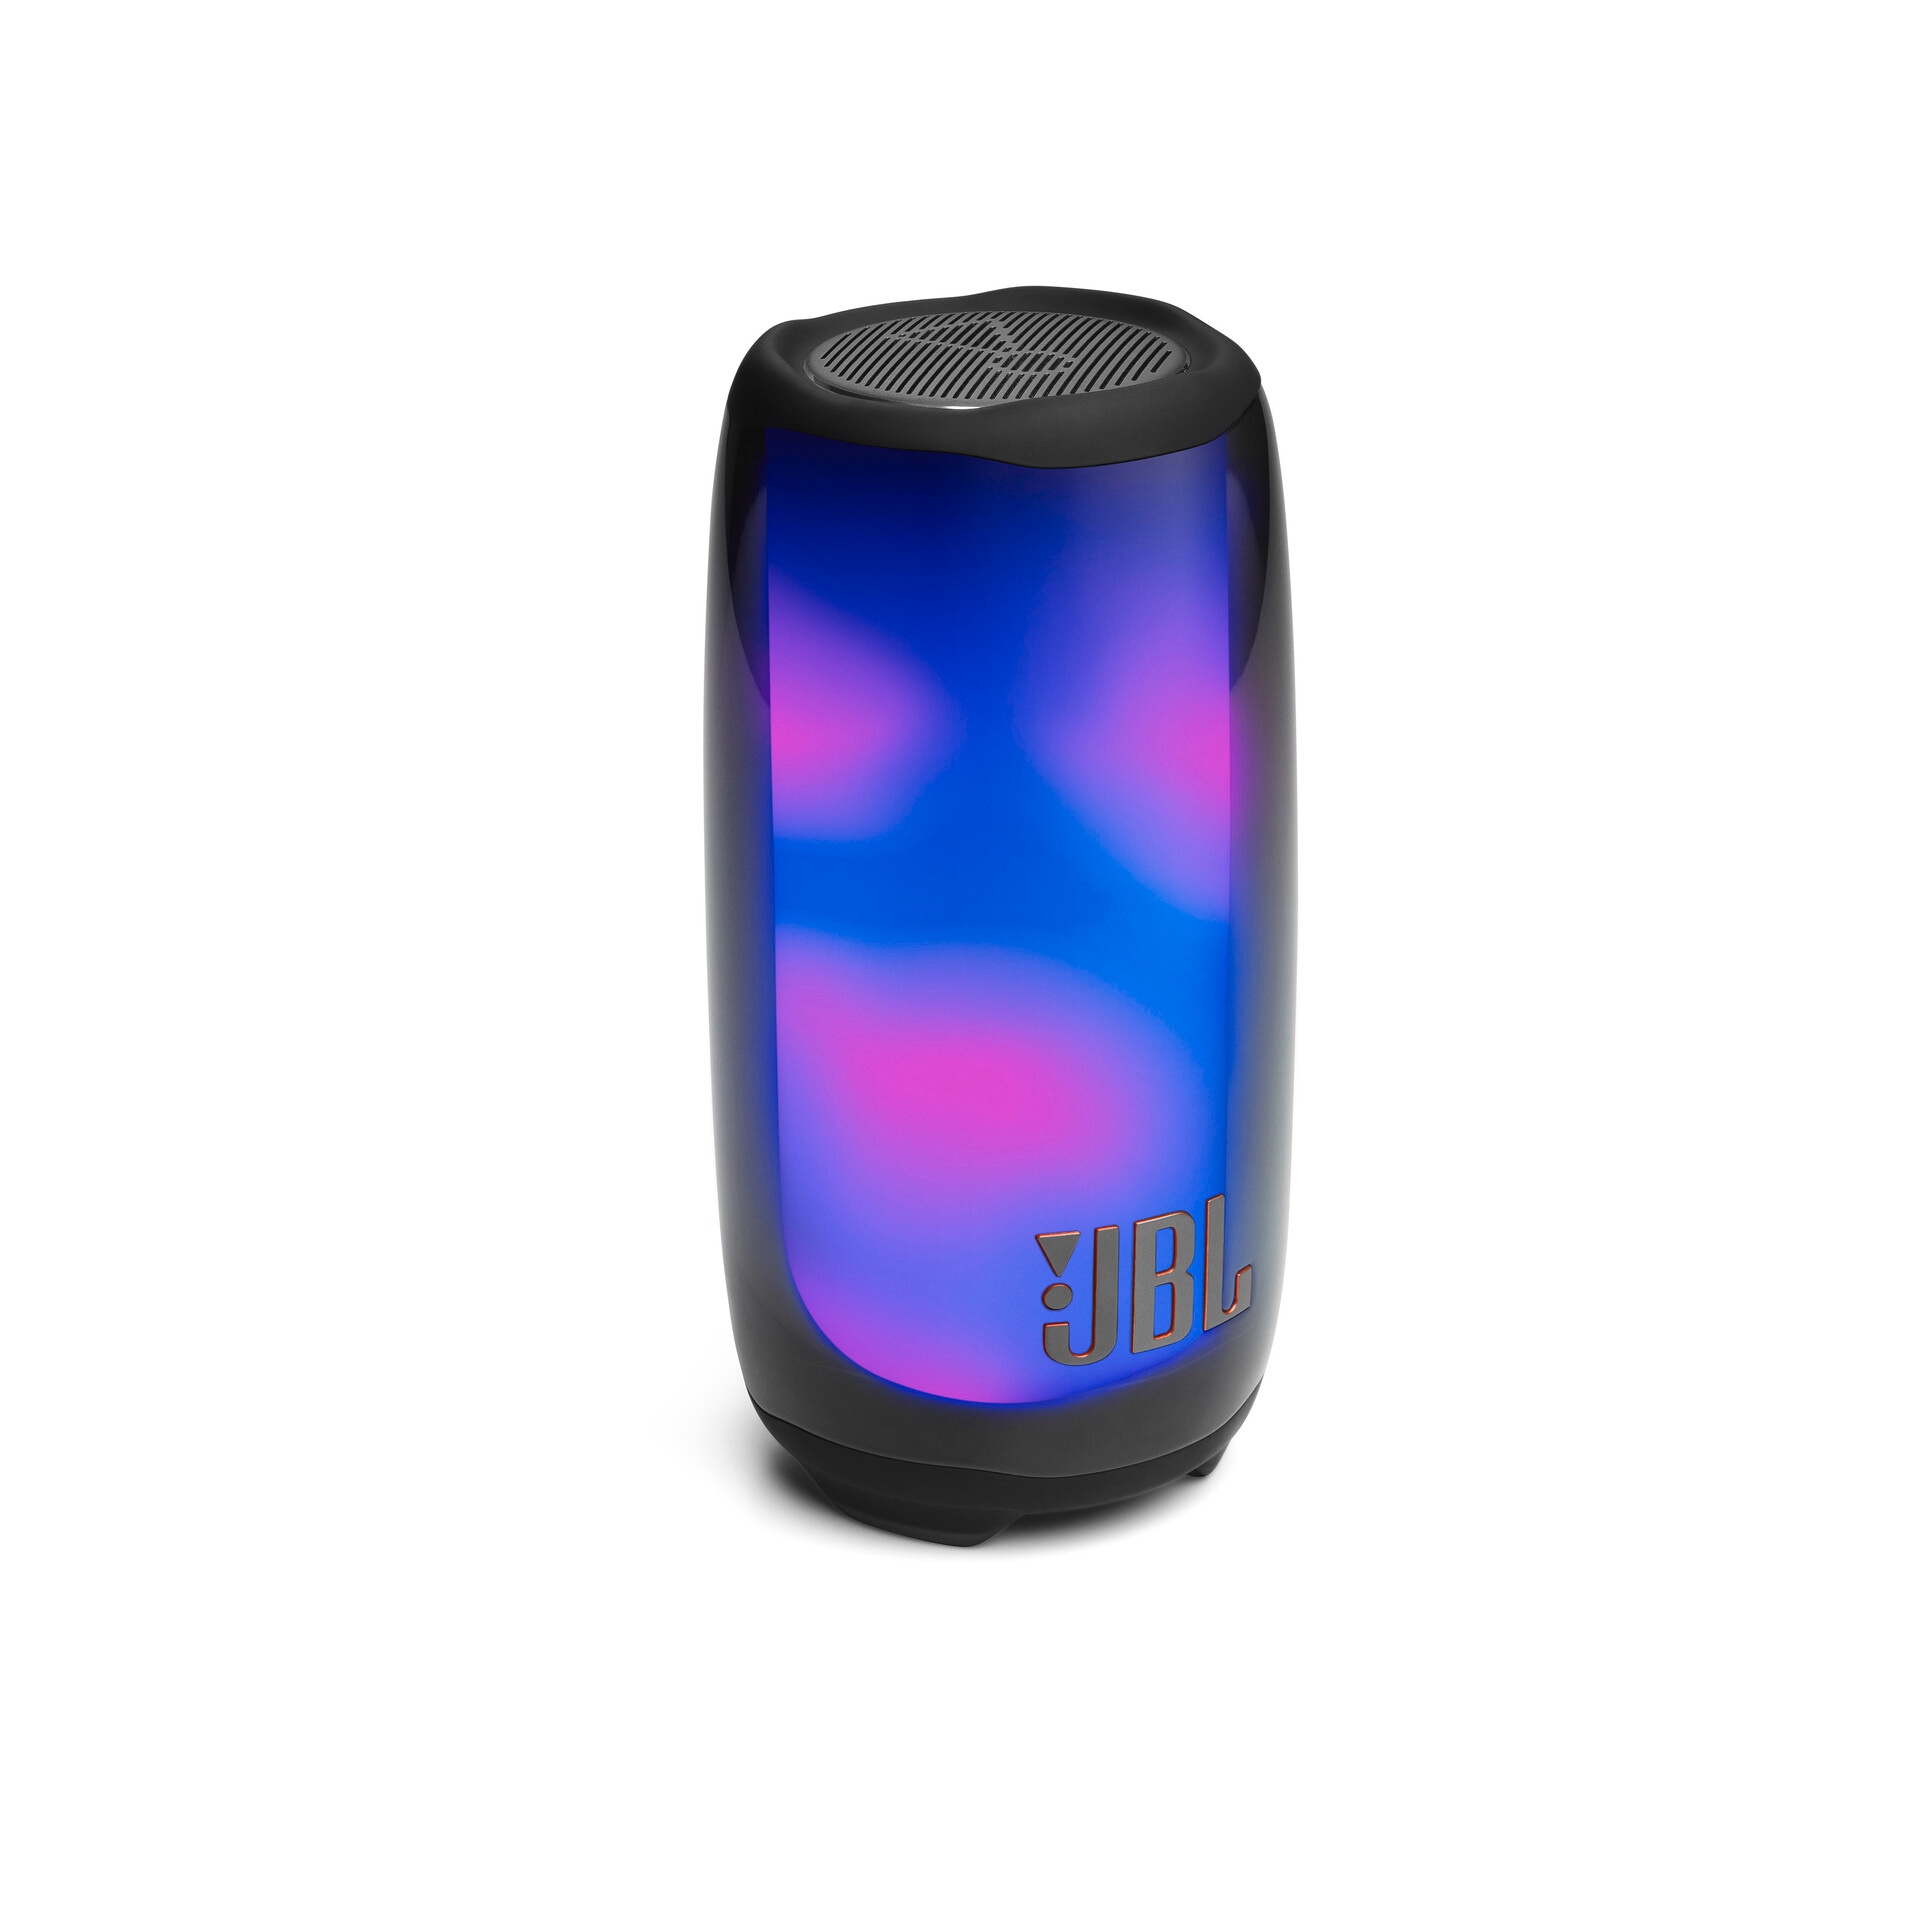 JBL Bluetooth-Lautsprecher »Pulse 5«, (1 OTTO kaufen bei St.)